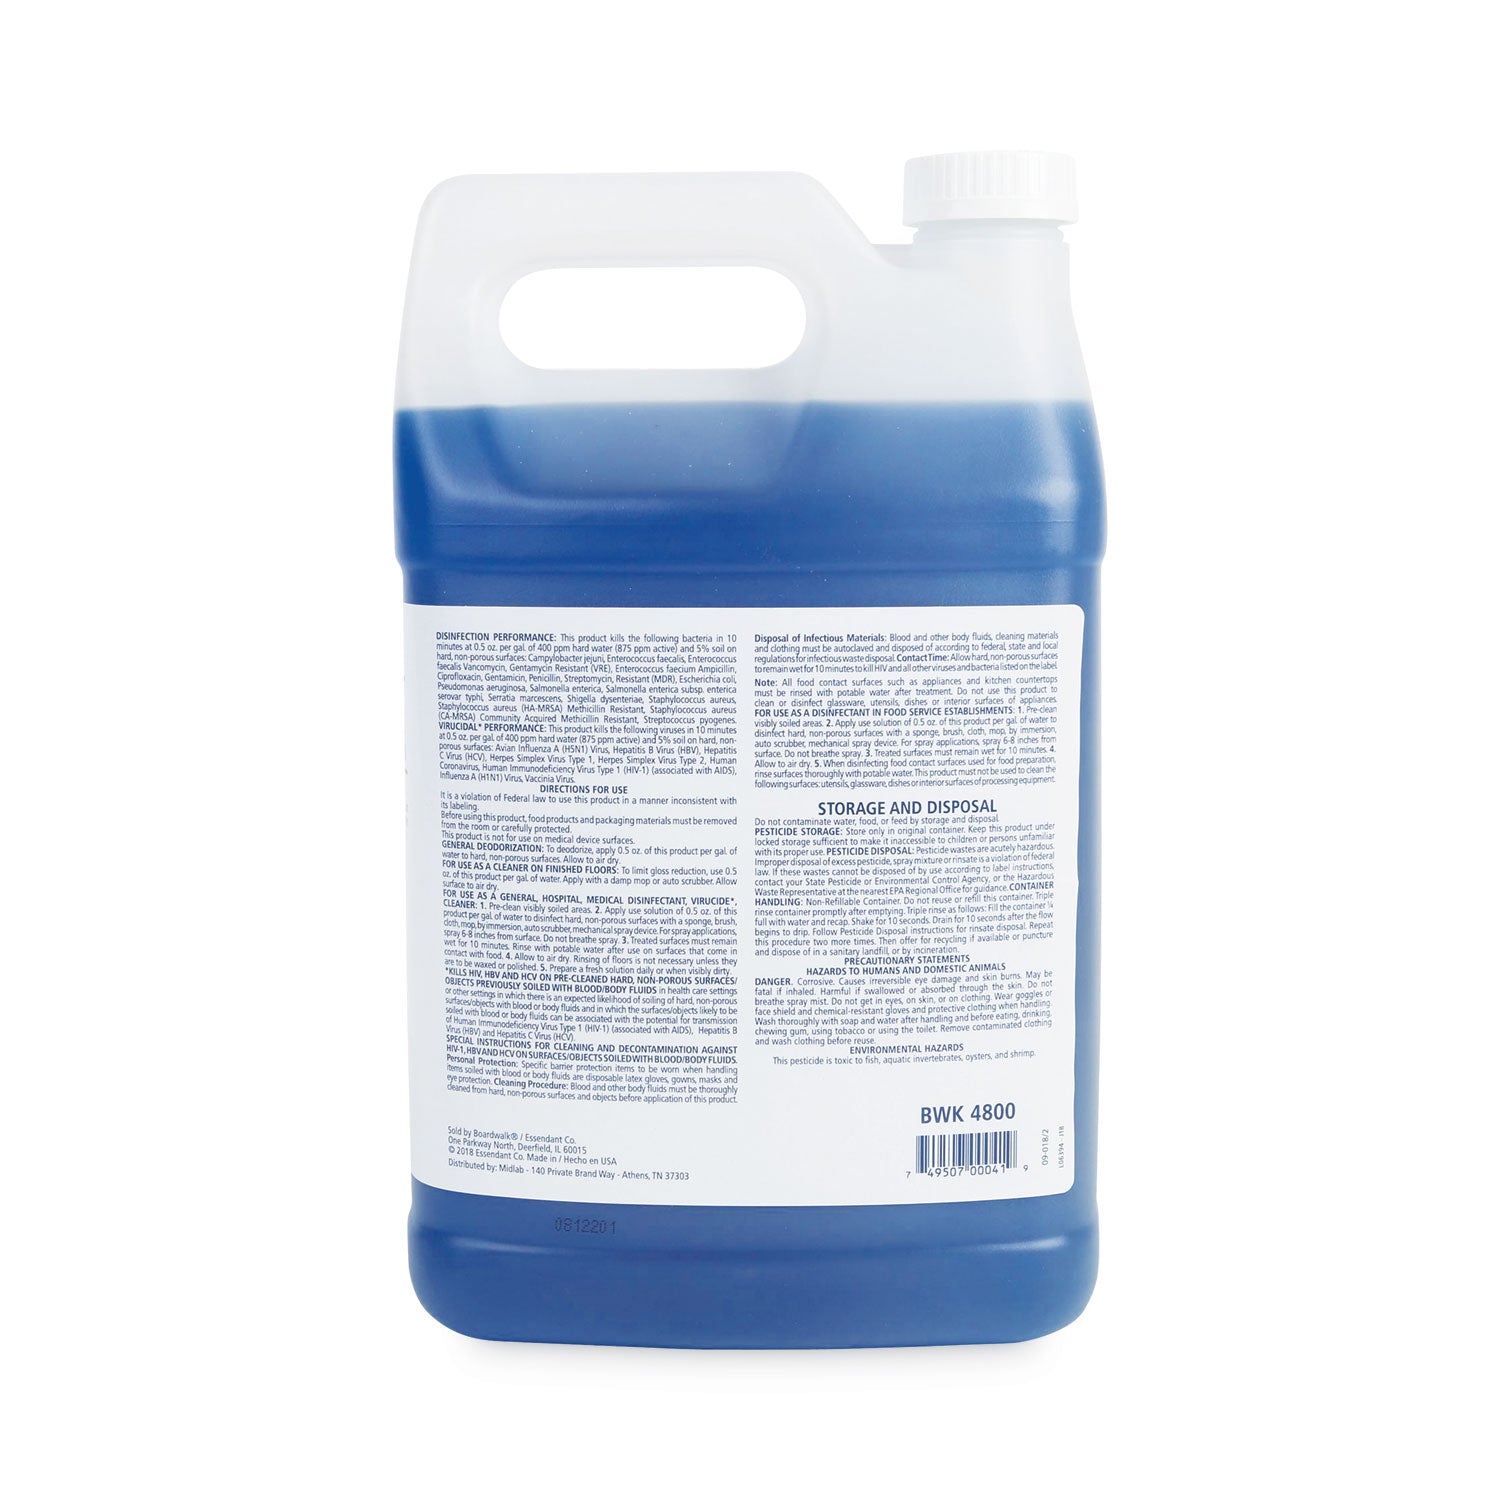 neutral-disinfectant-floral-scent-1-gal-bottle-4-carton_bwk4800 - 2